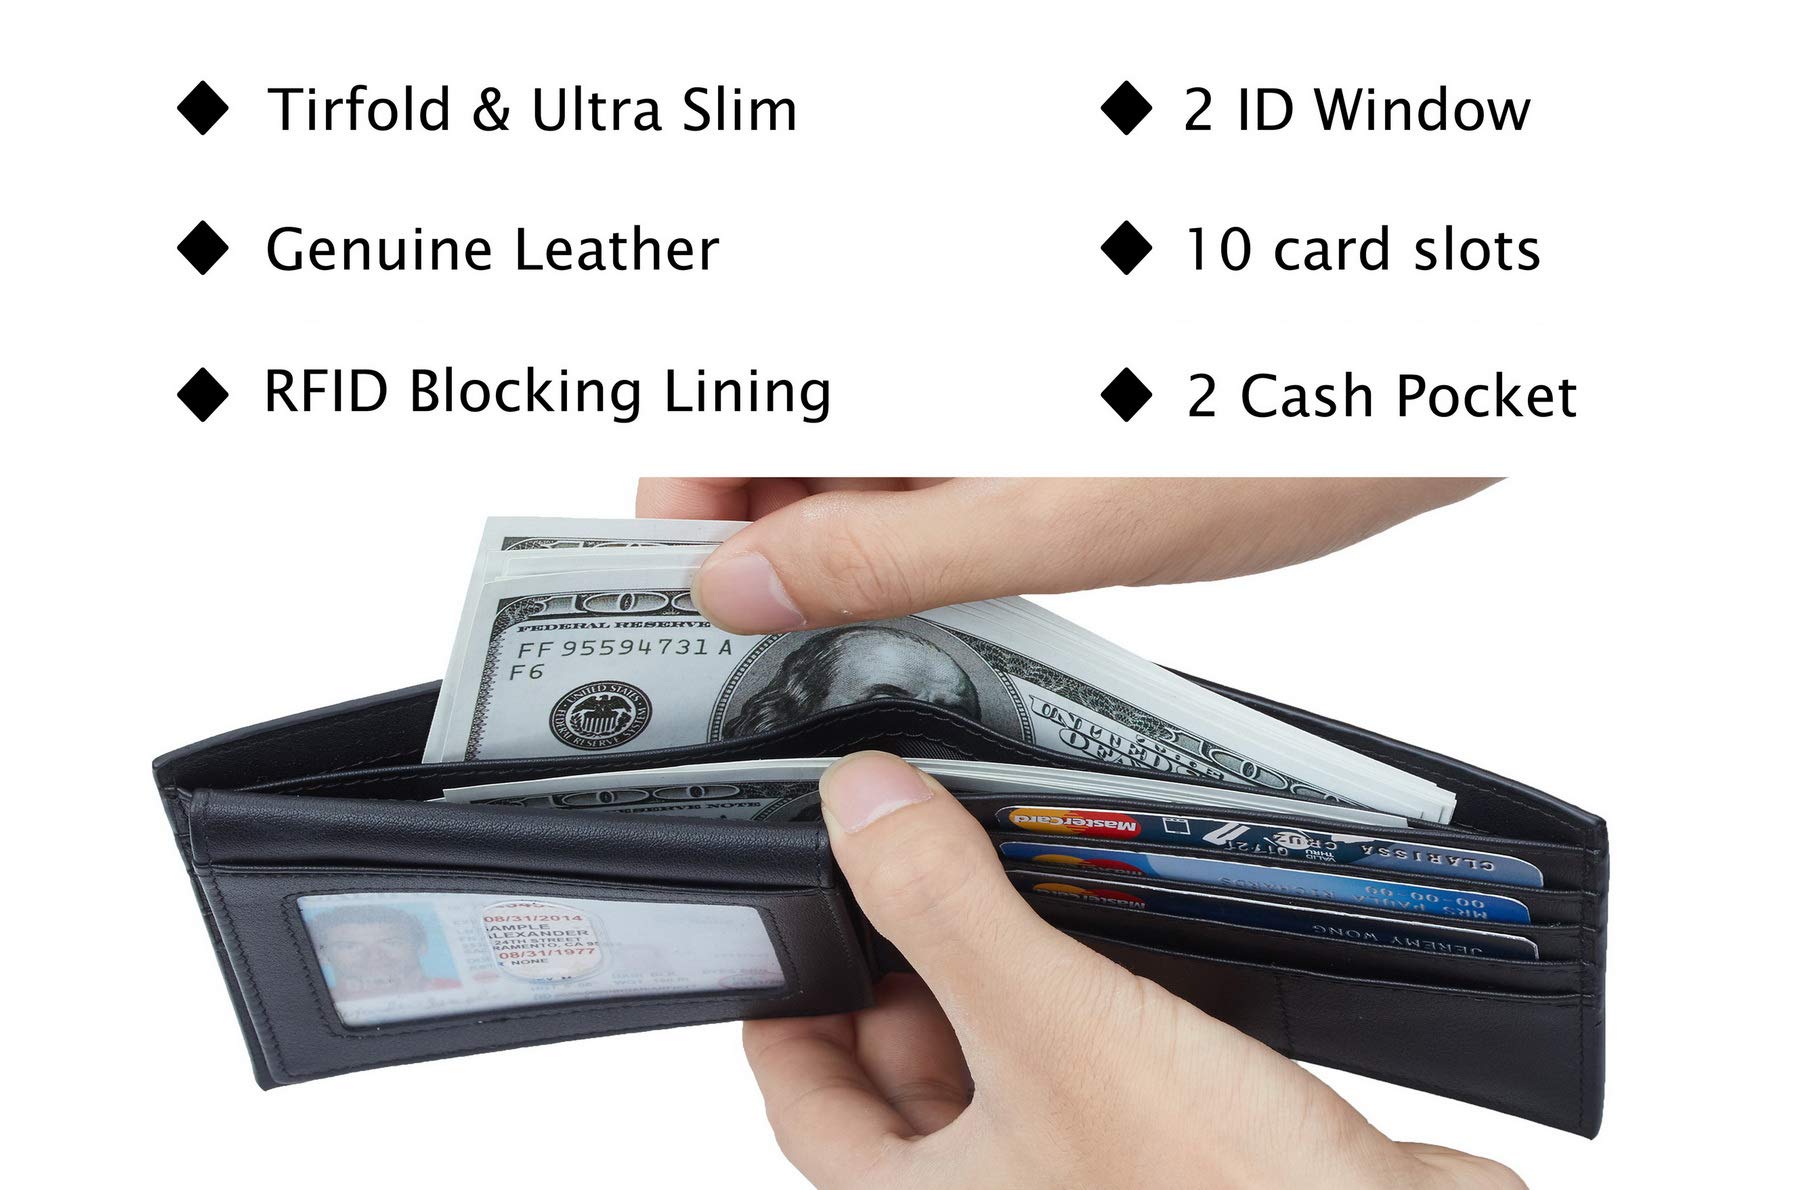 Travelambo Genuine Leather RFID Blocking Wallets Mens Wallet Bifold Classic